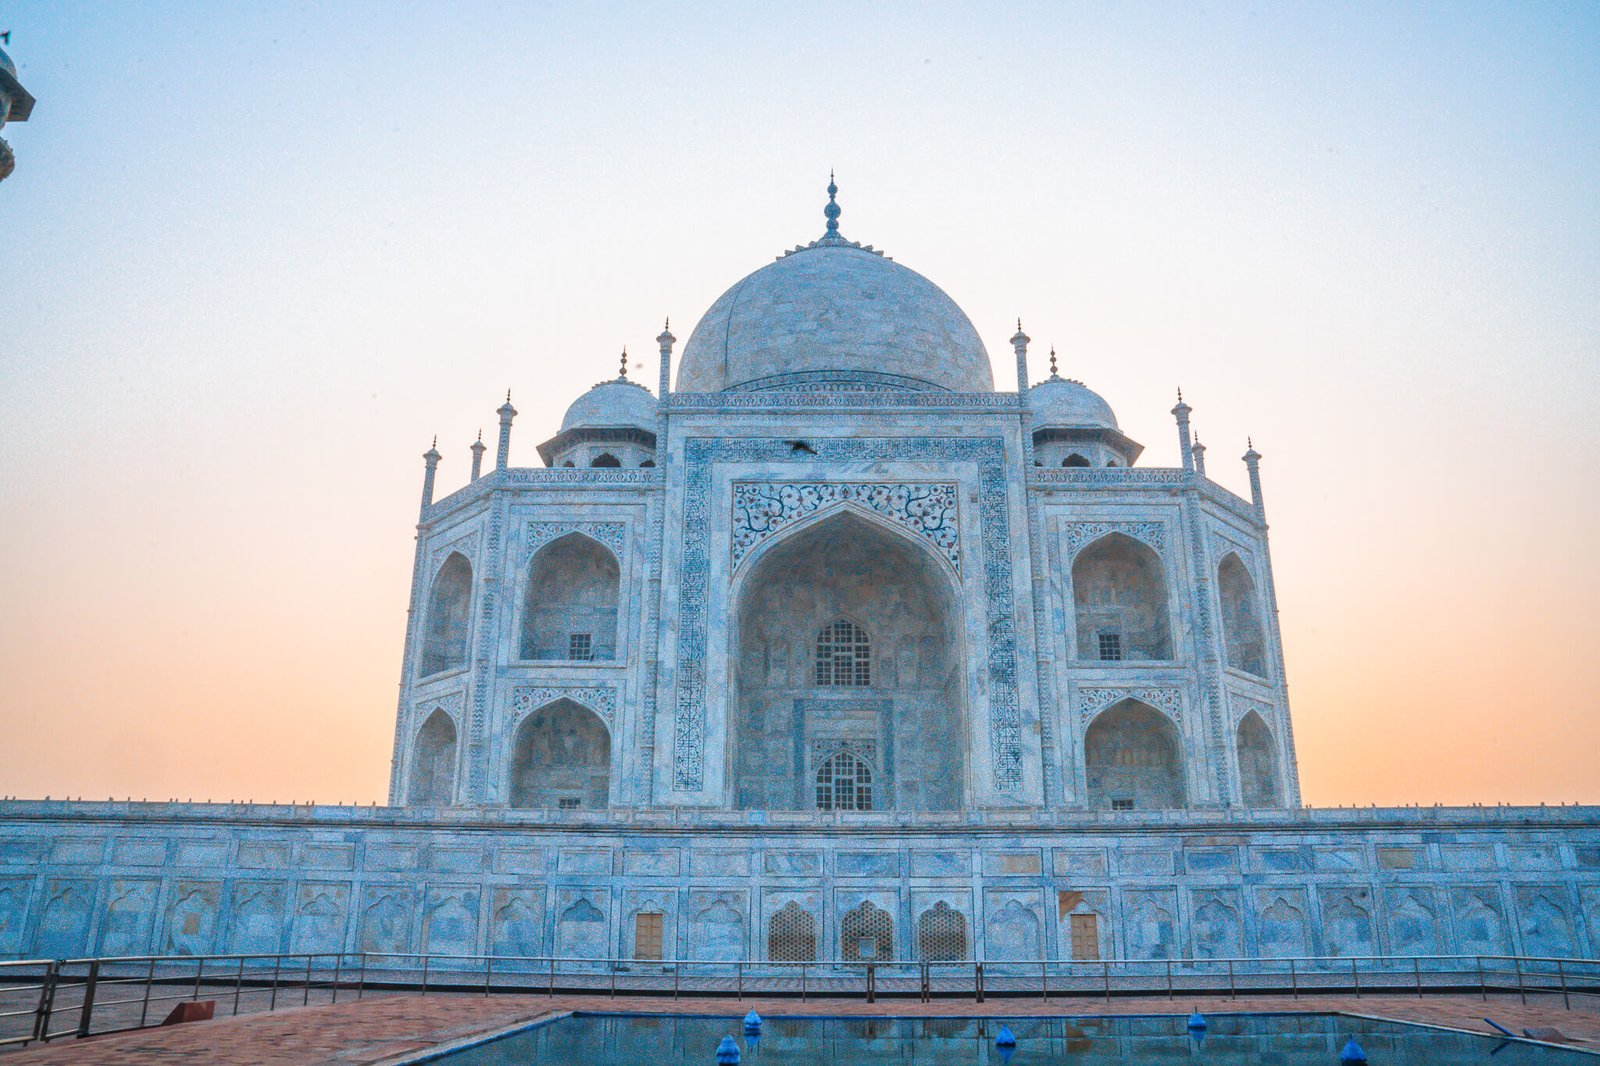 visiting the Taj Mahal in India at sunset